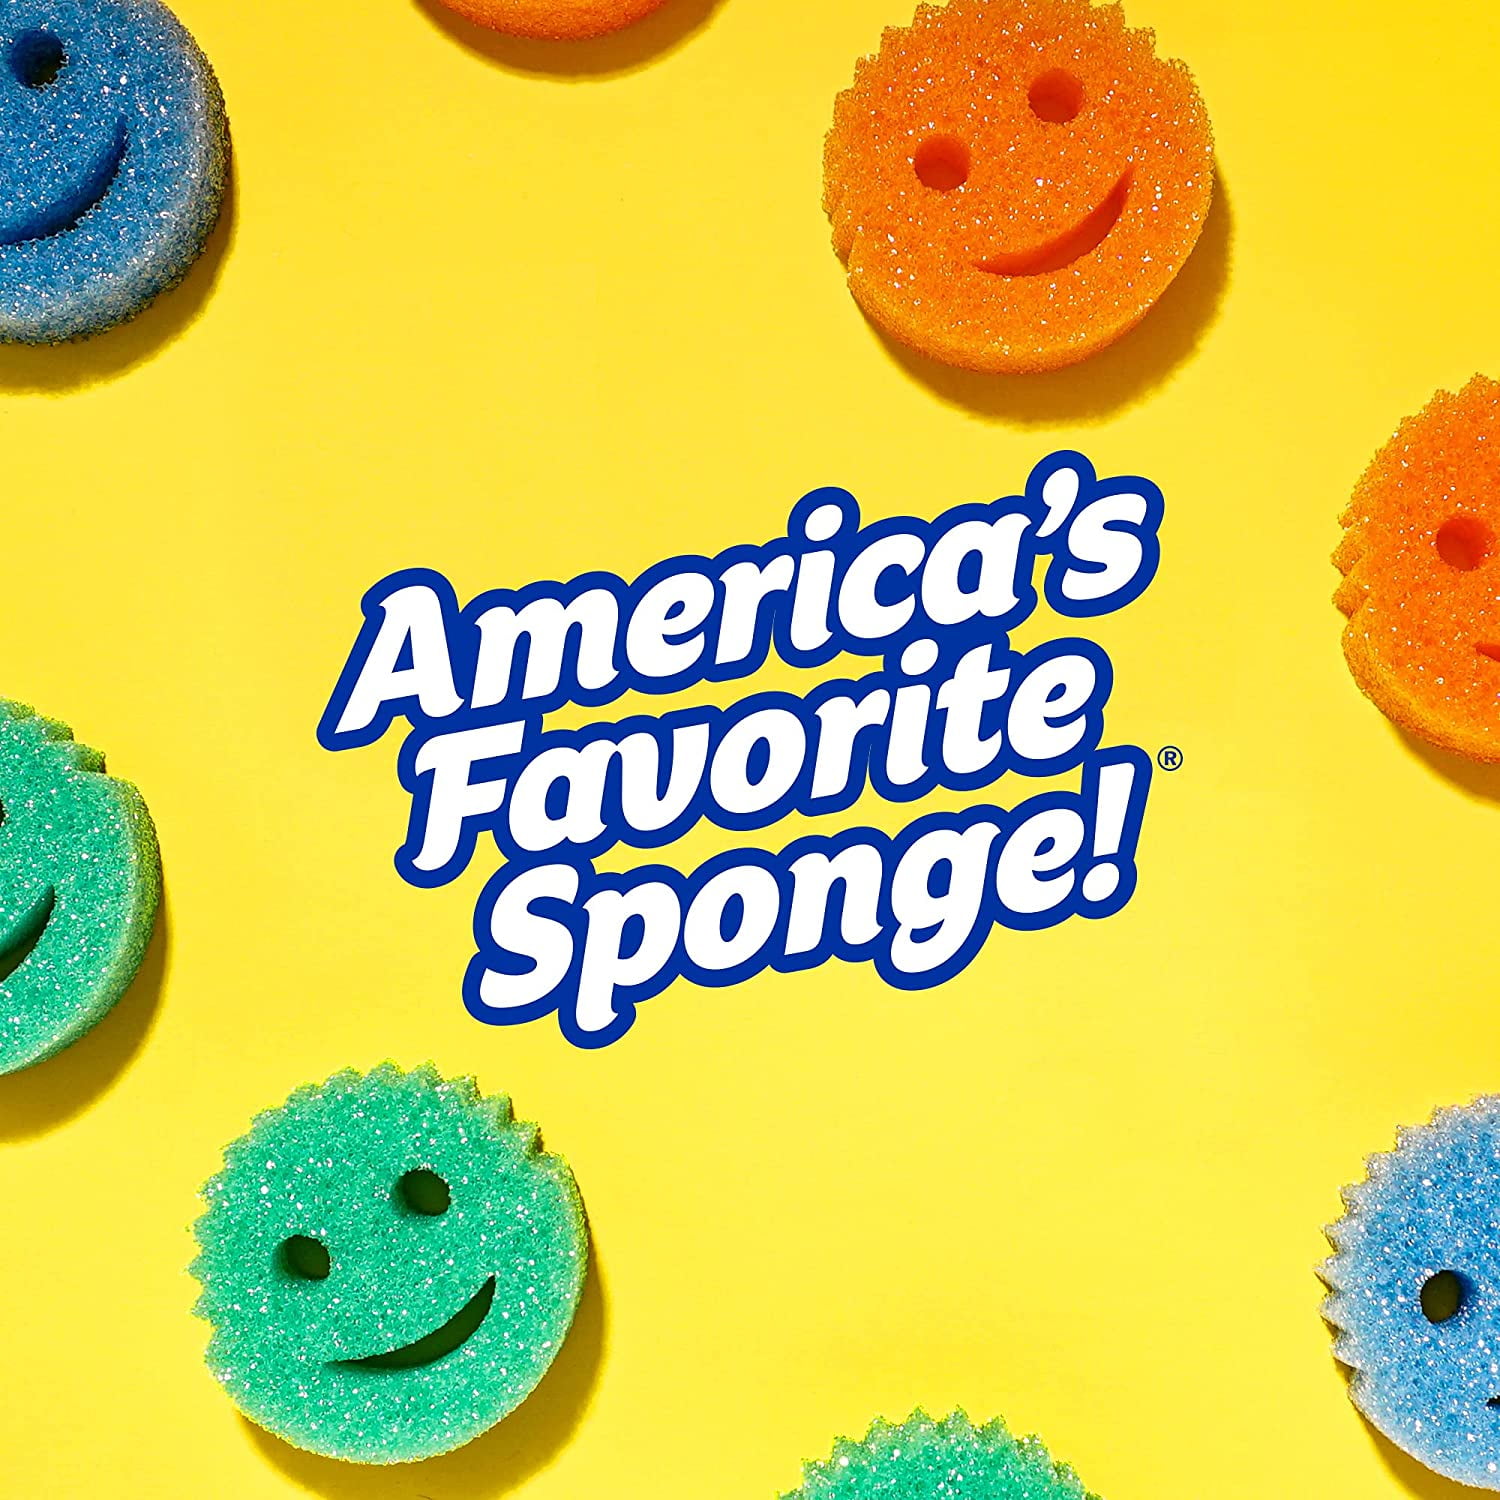 Scrub Daddy® Sponge Daddy® Dual-Sided Sponge